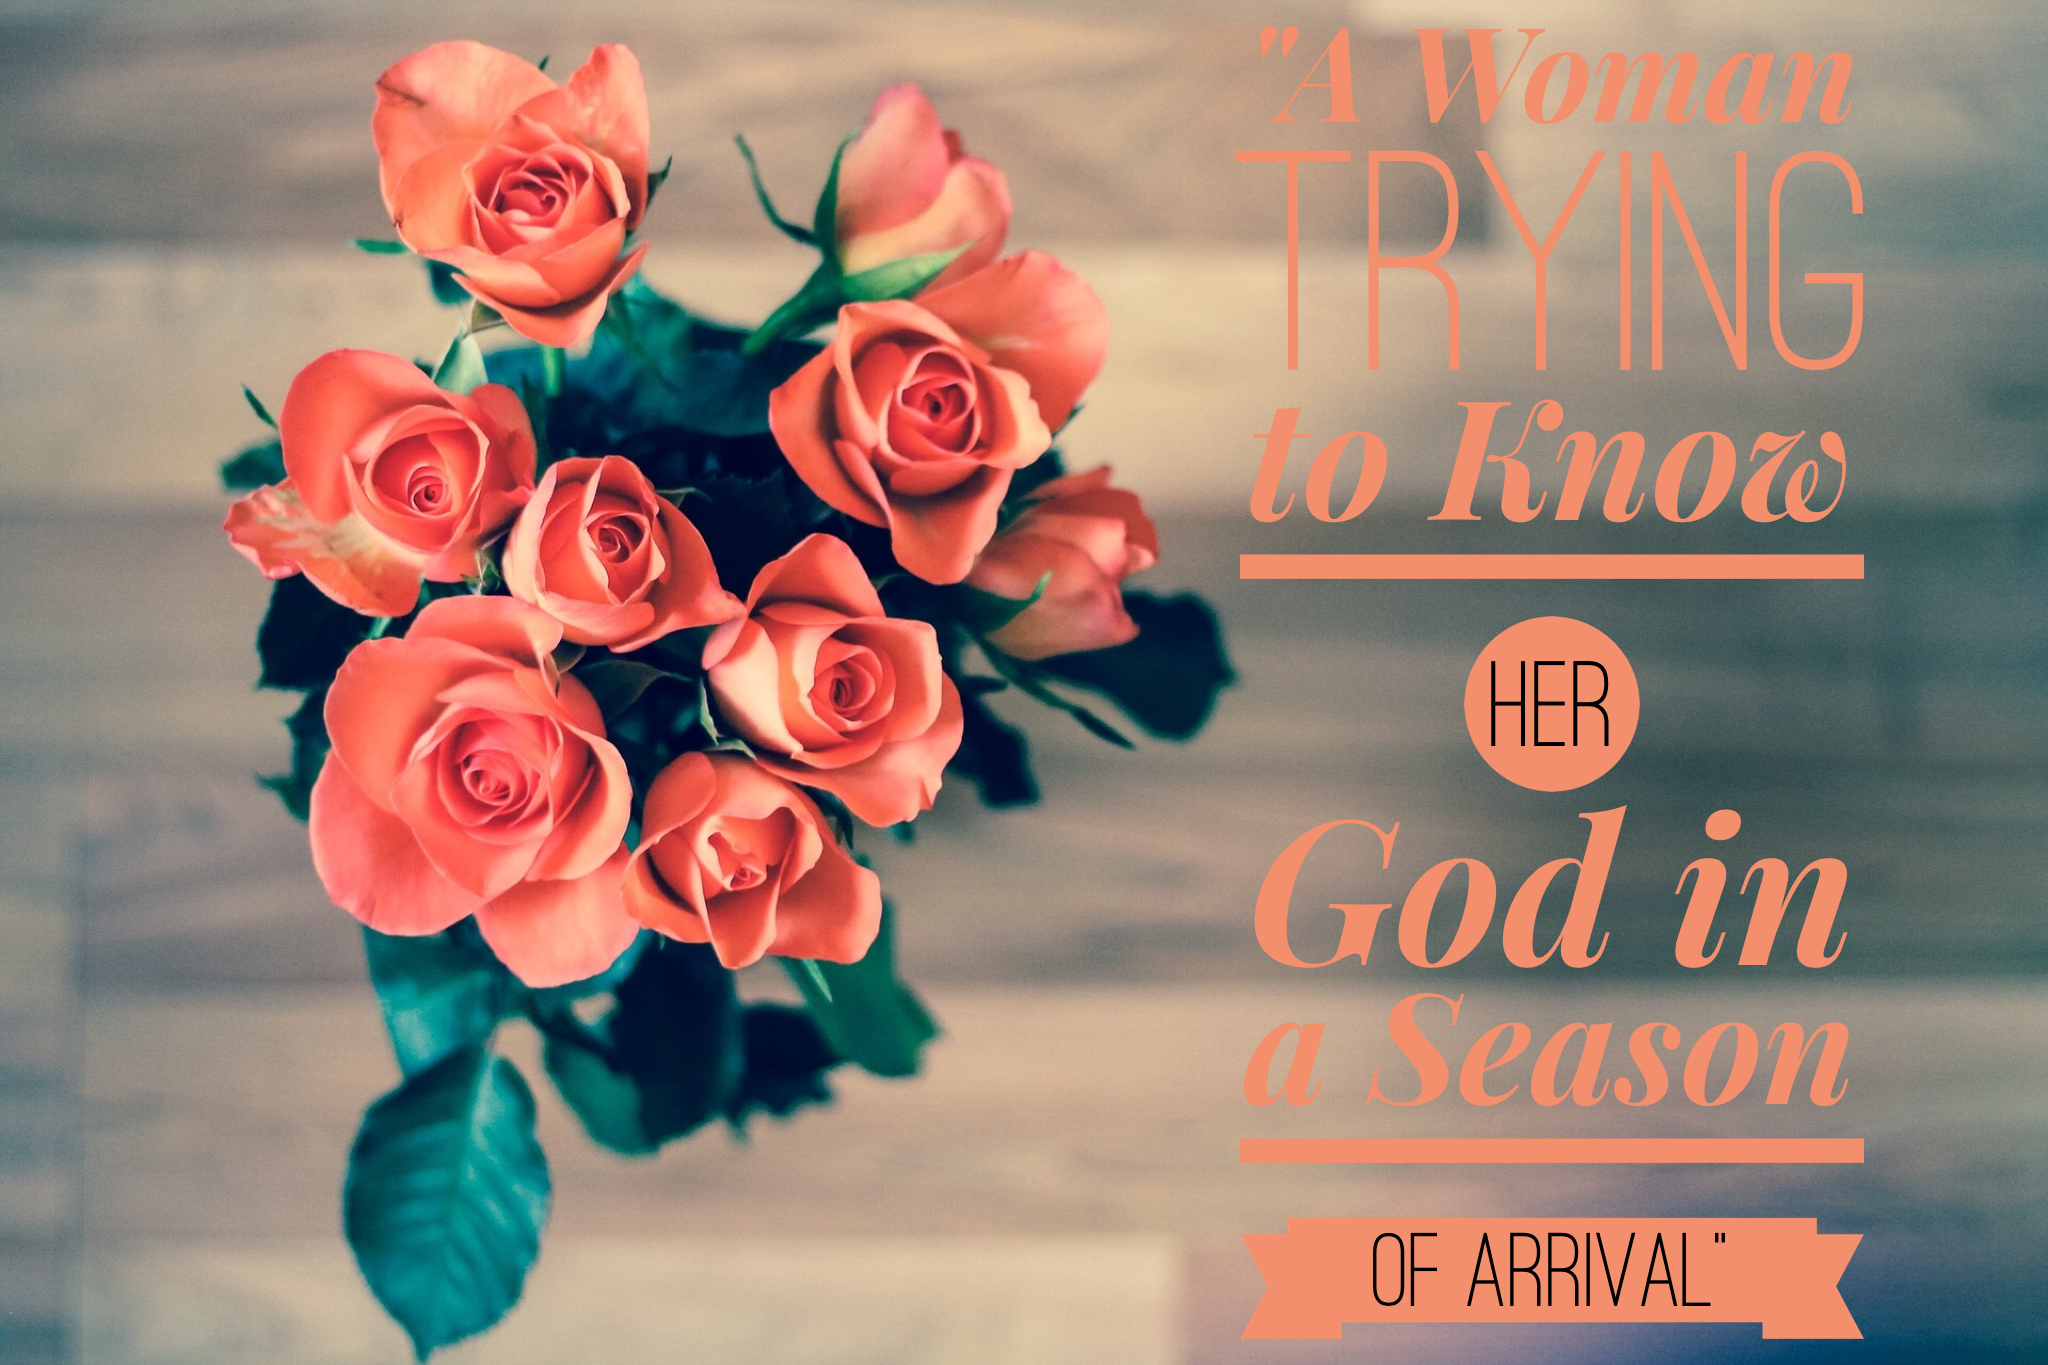 A Woman Seeking to Know Her God in a Season of Arrival | www.codyandras.com/blog/2017/8/12/a-woman-seeking-to-know-her-god-in-a-season-of-arrival